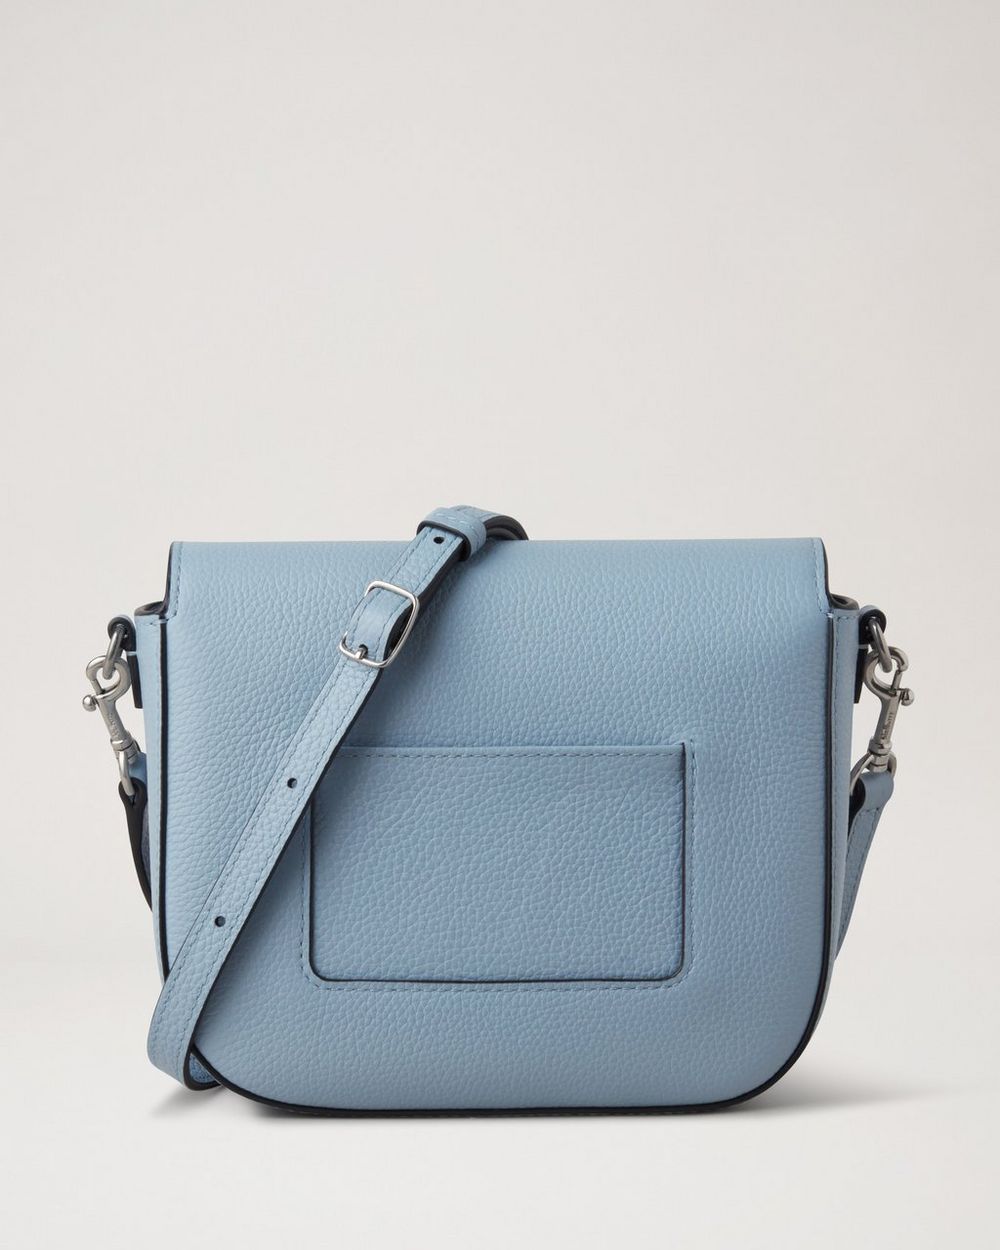 Louis Satchel bag - Navy Blue - Leather Crossbody, Messenger bag - Made in  France